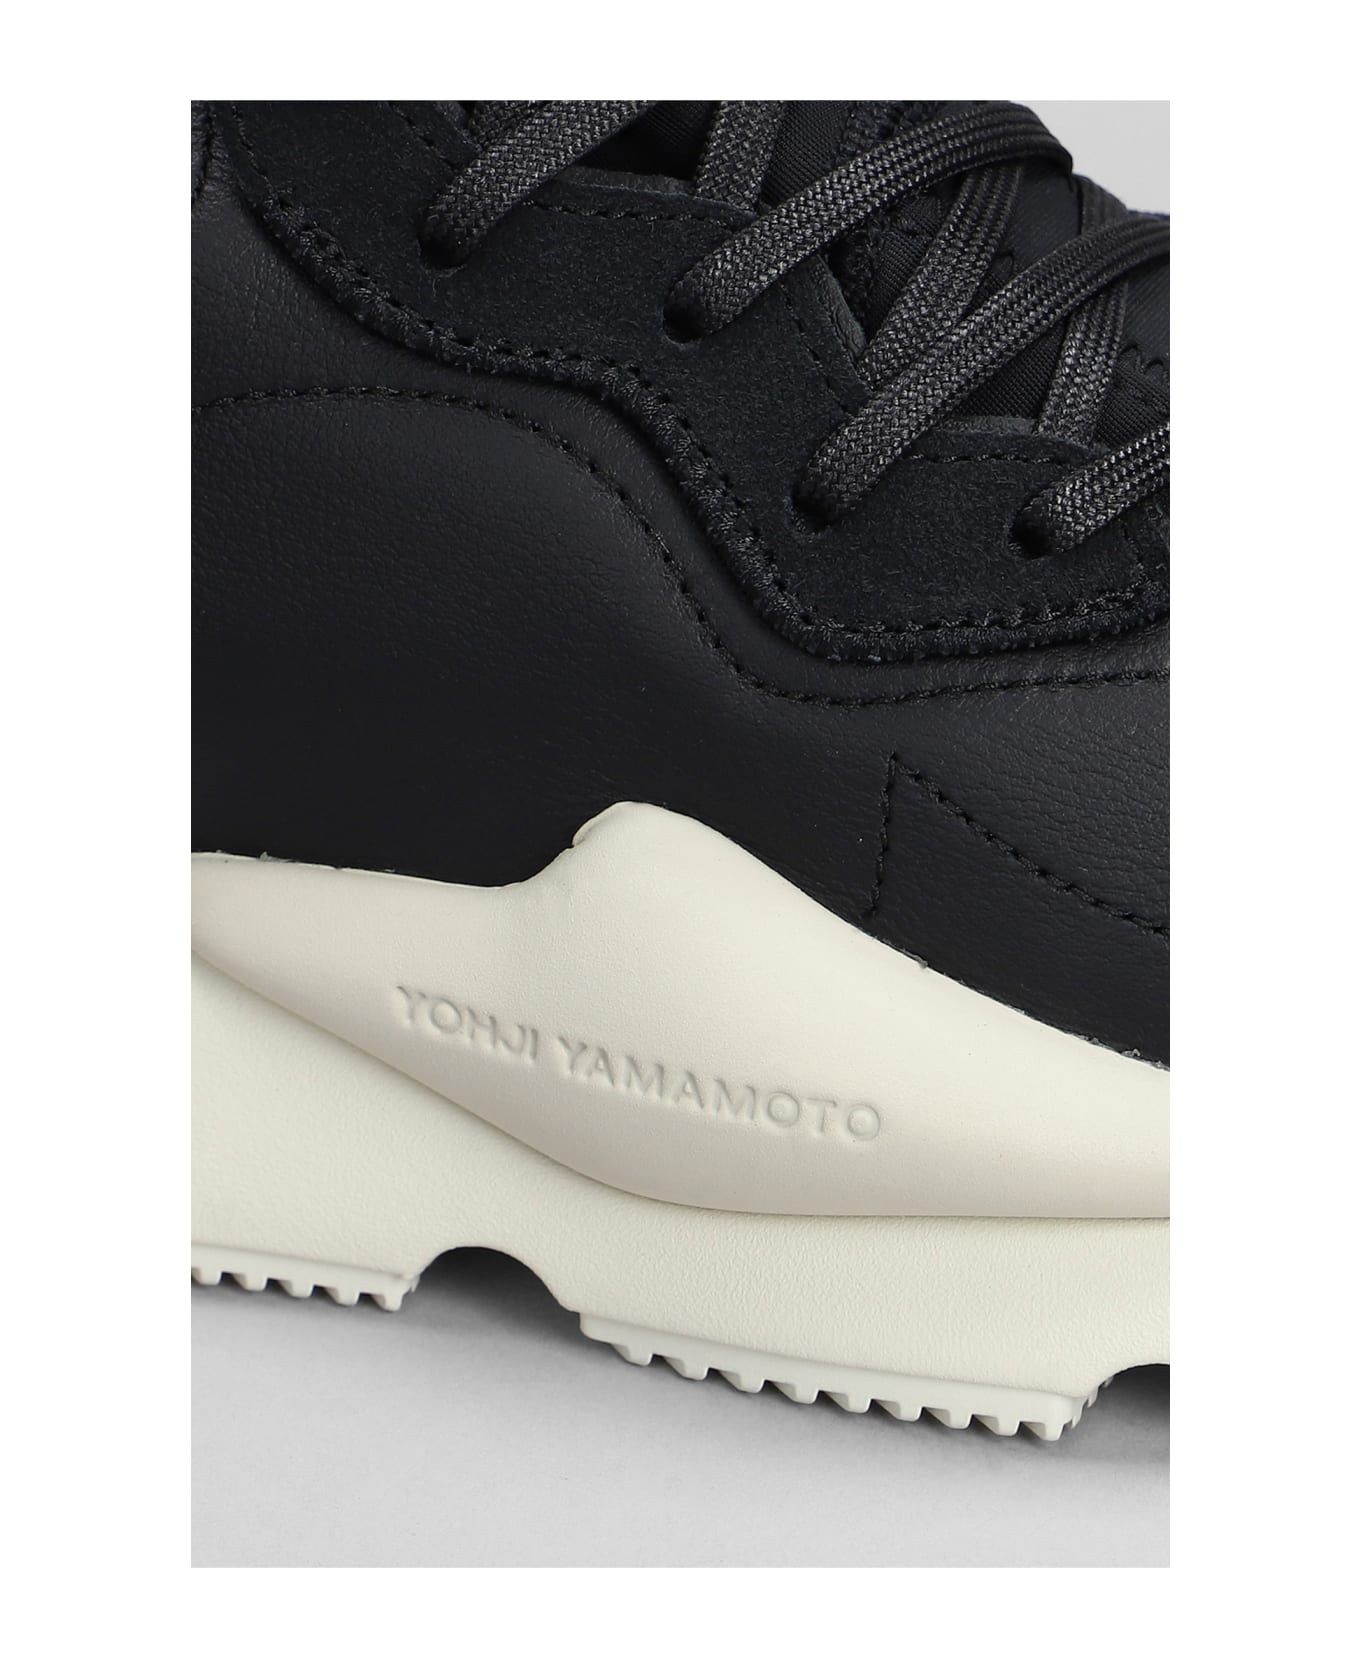 Y-3 Black Leather Blend Sneakers - Black/owhite/cbro スニーカー